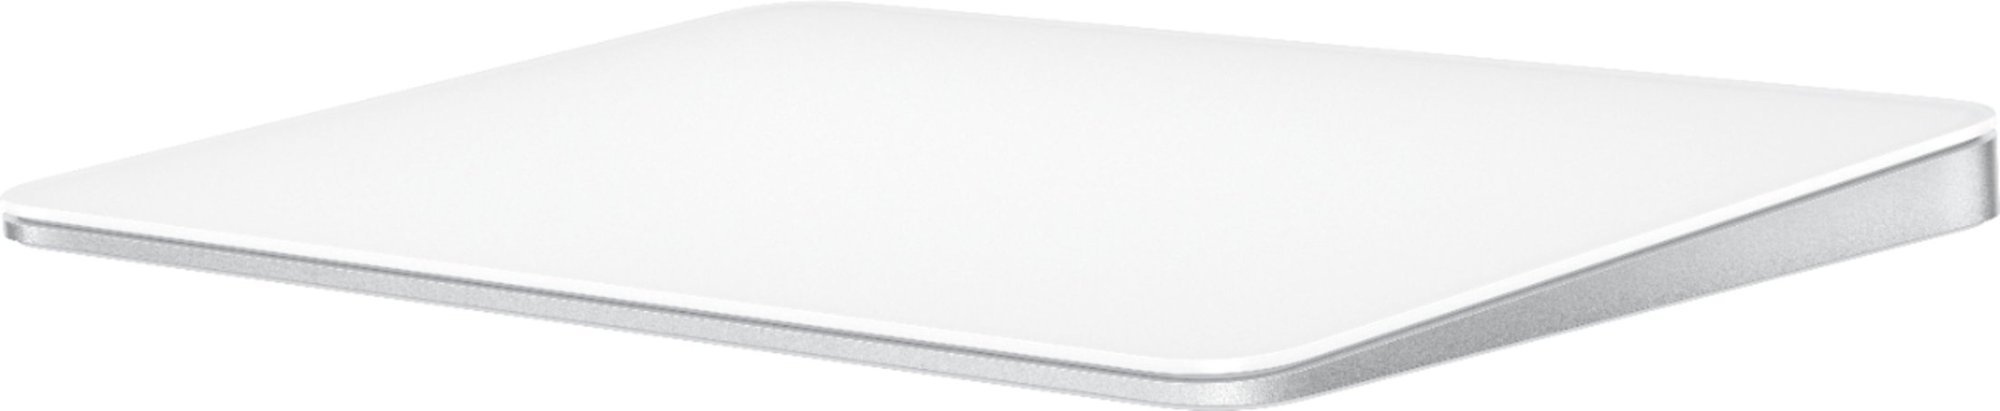 Apple - Magic Trackpad - White-White